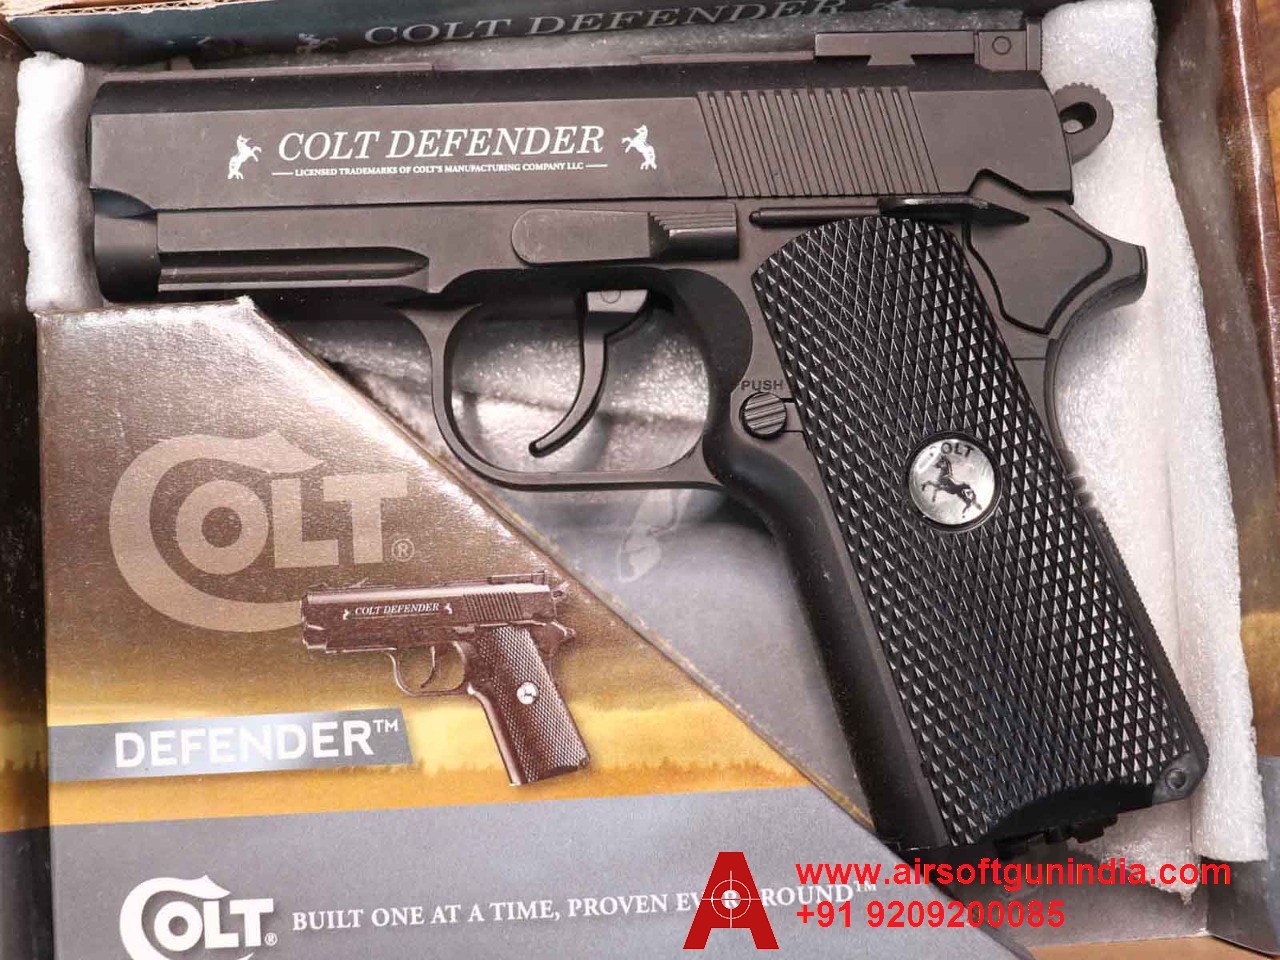 Colt Defender Cal .177, 4.5mm Co2 BB Air Pistol By Airsoft Gun India